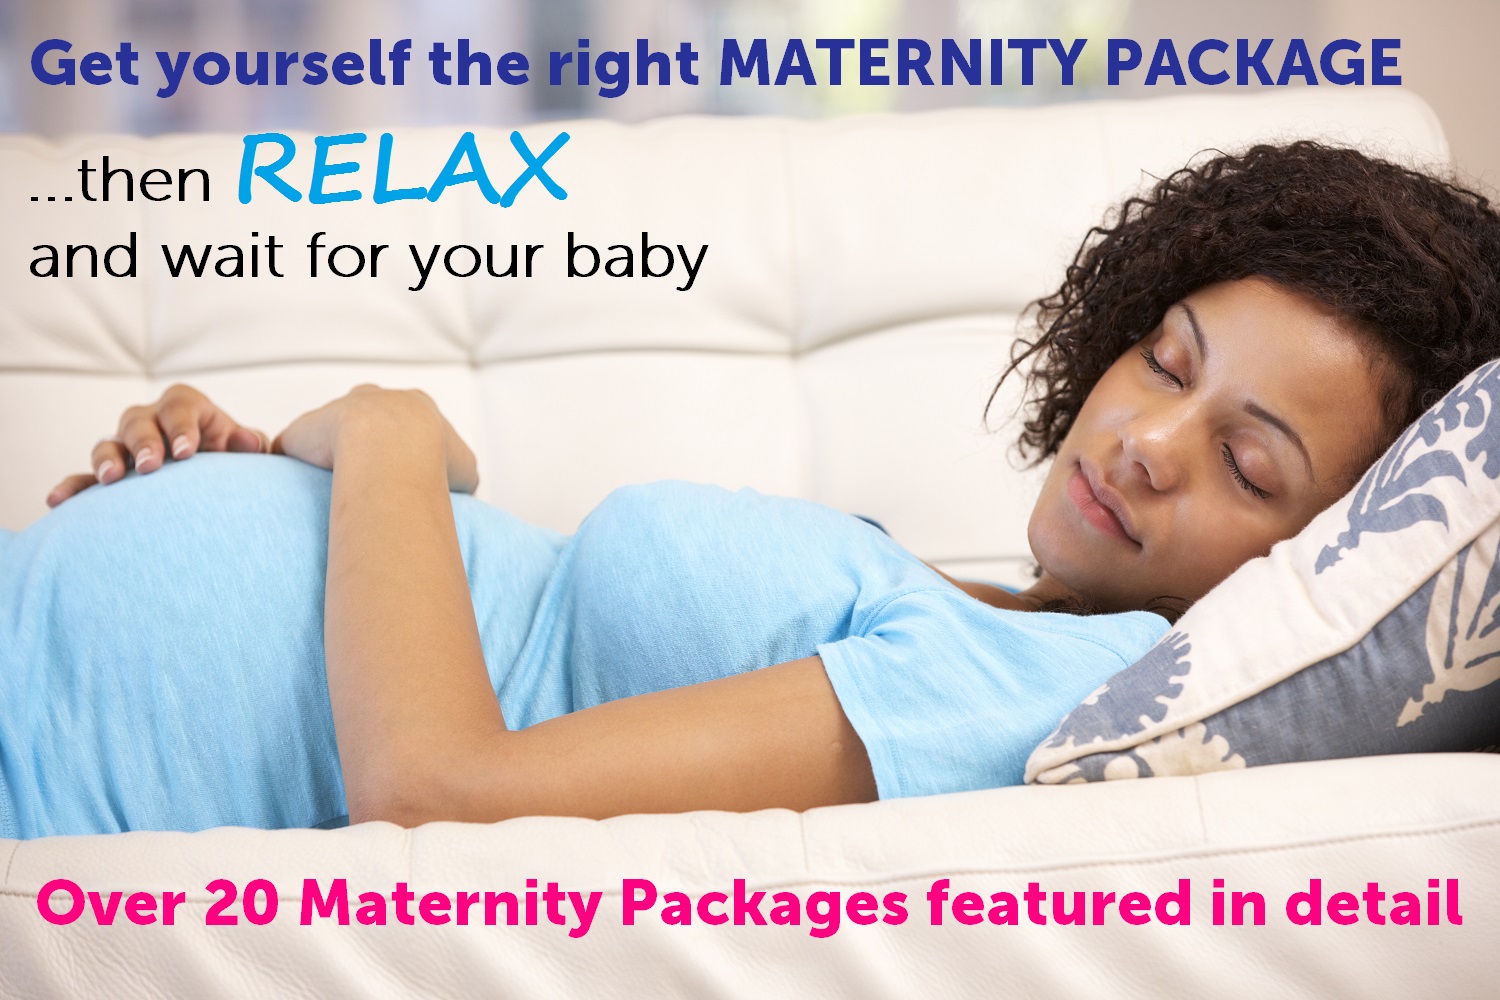 maternity-packages-babylove-network-nairobi-kenya_ss_200267420